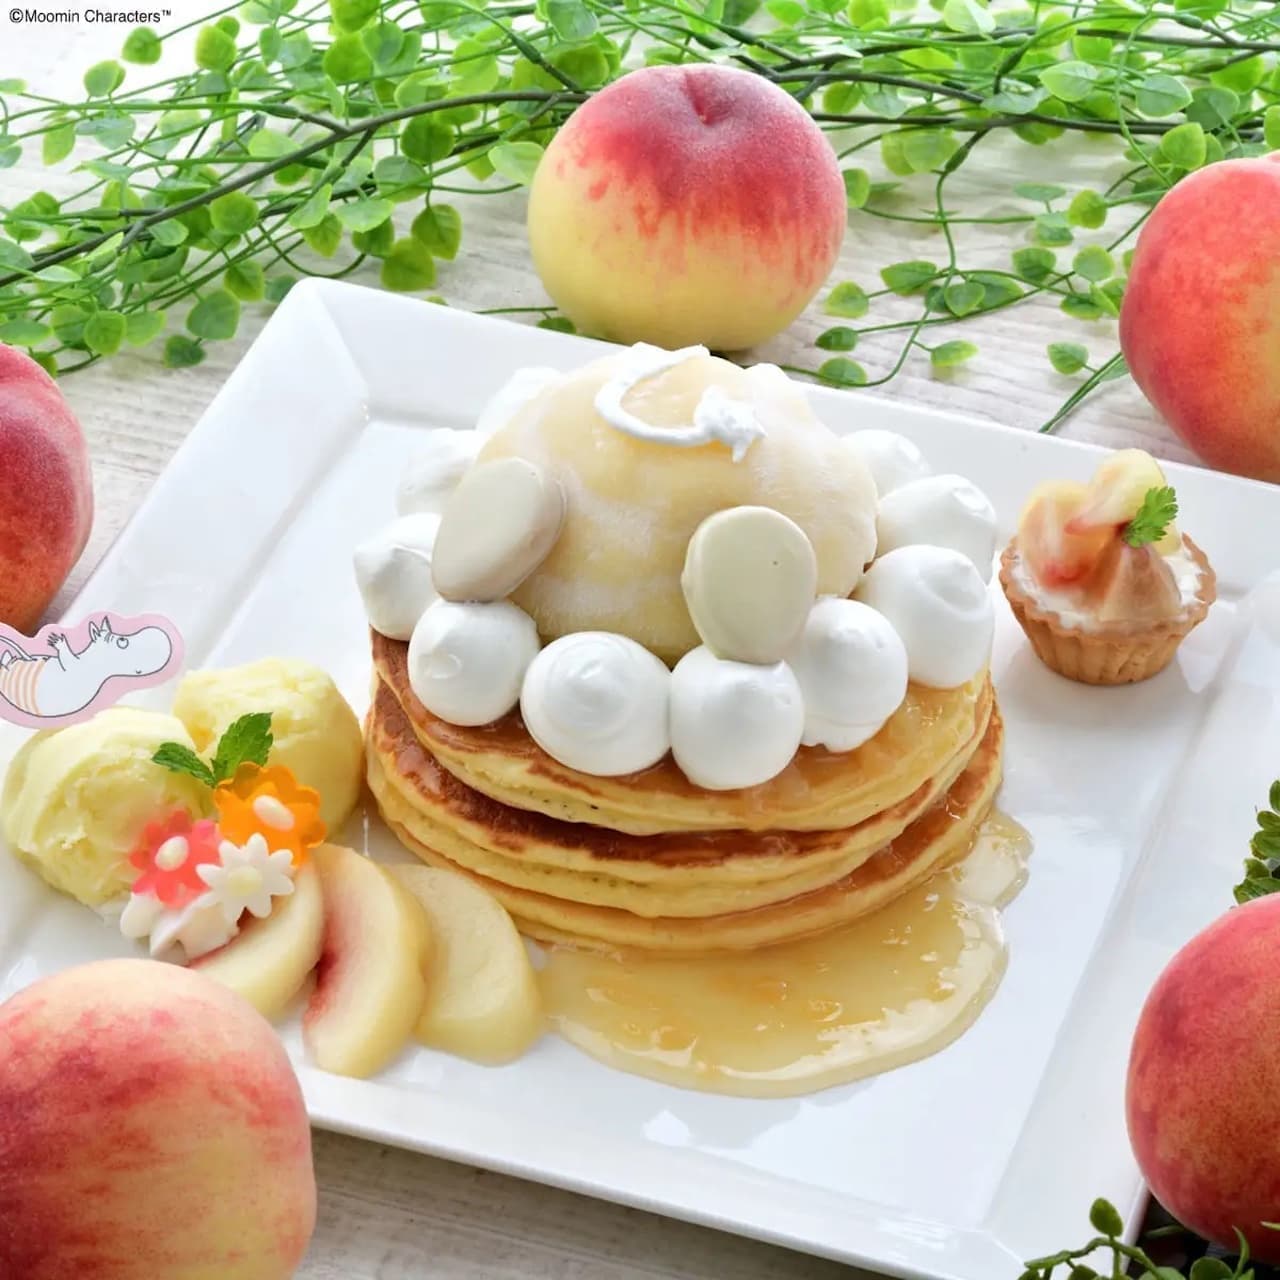 Moomin Cafe "Manmaru Oshiri Momo Apricot Pudding Pancake